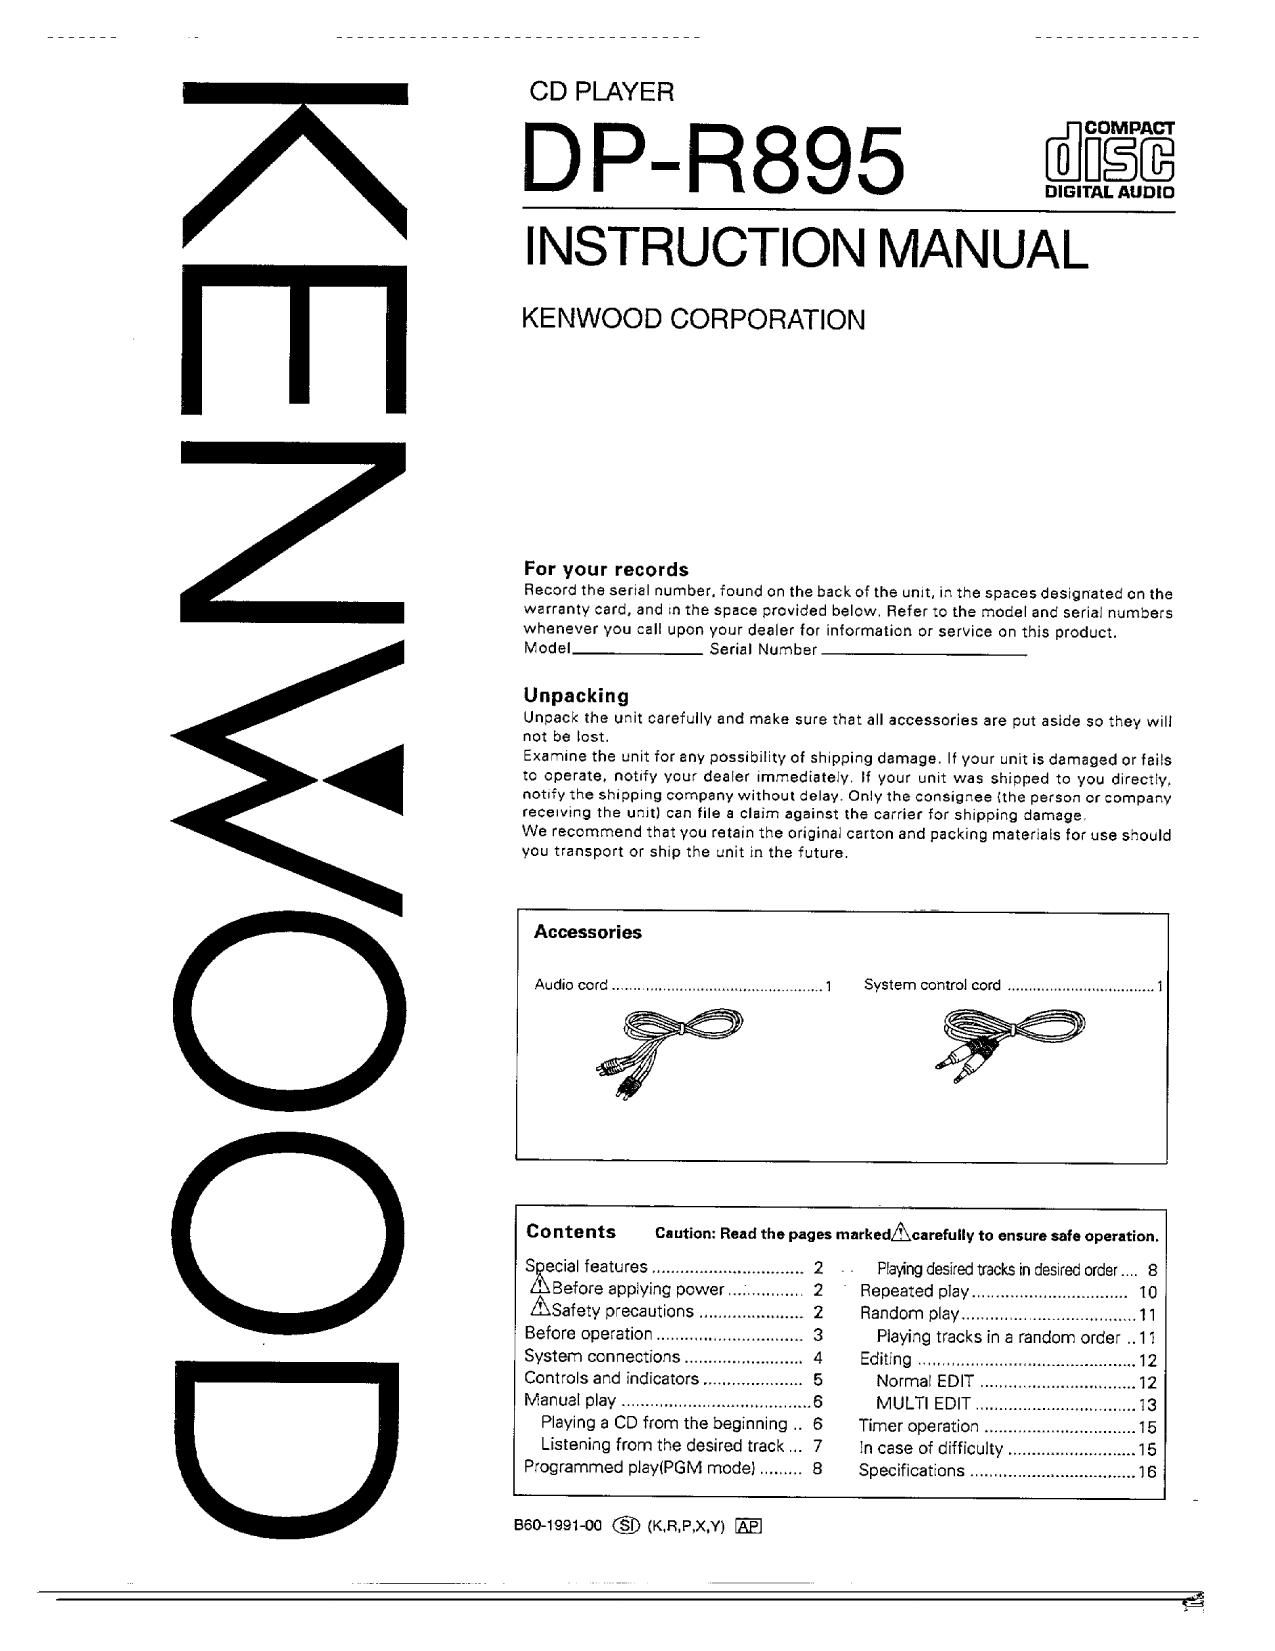 Kenwood DPR 895 Owners Manual